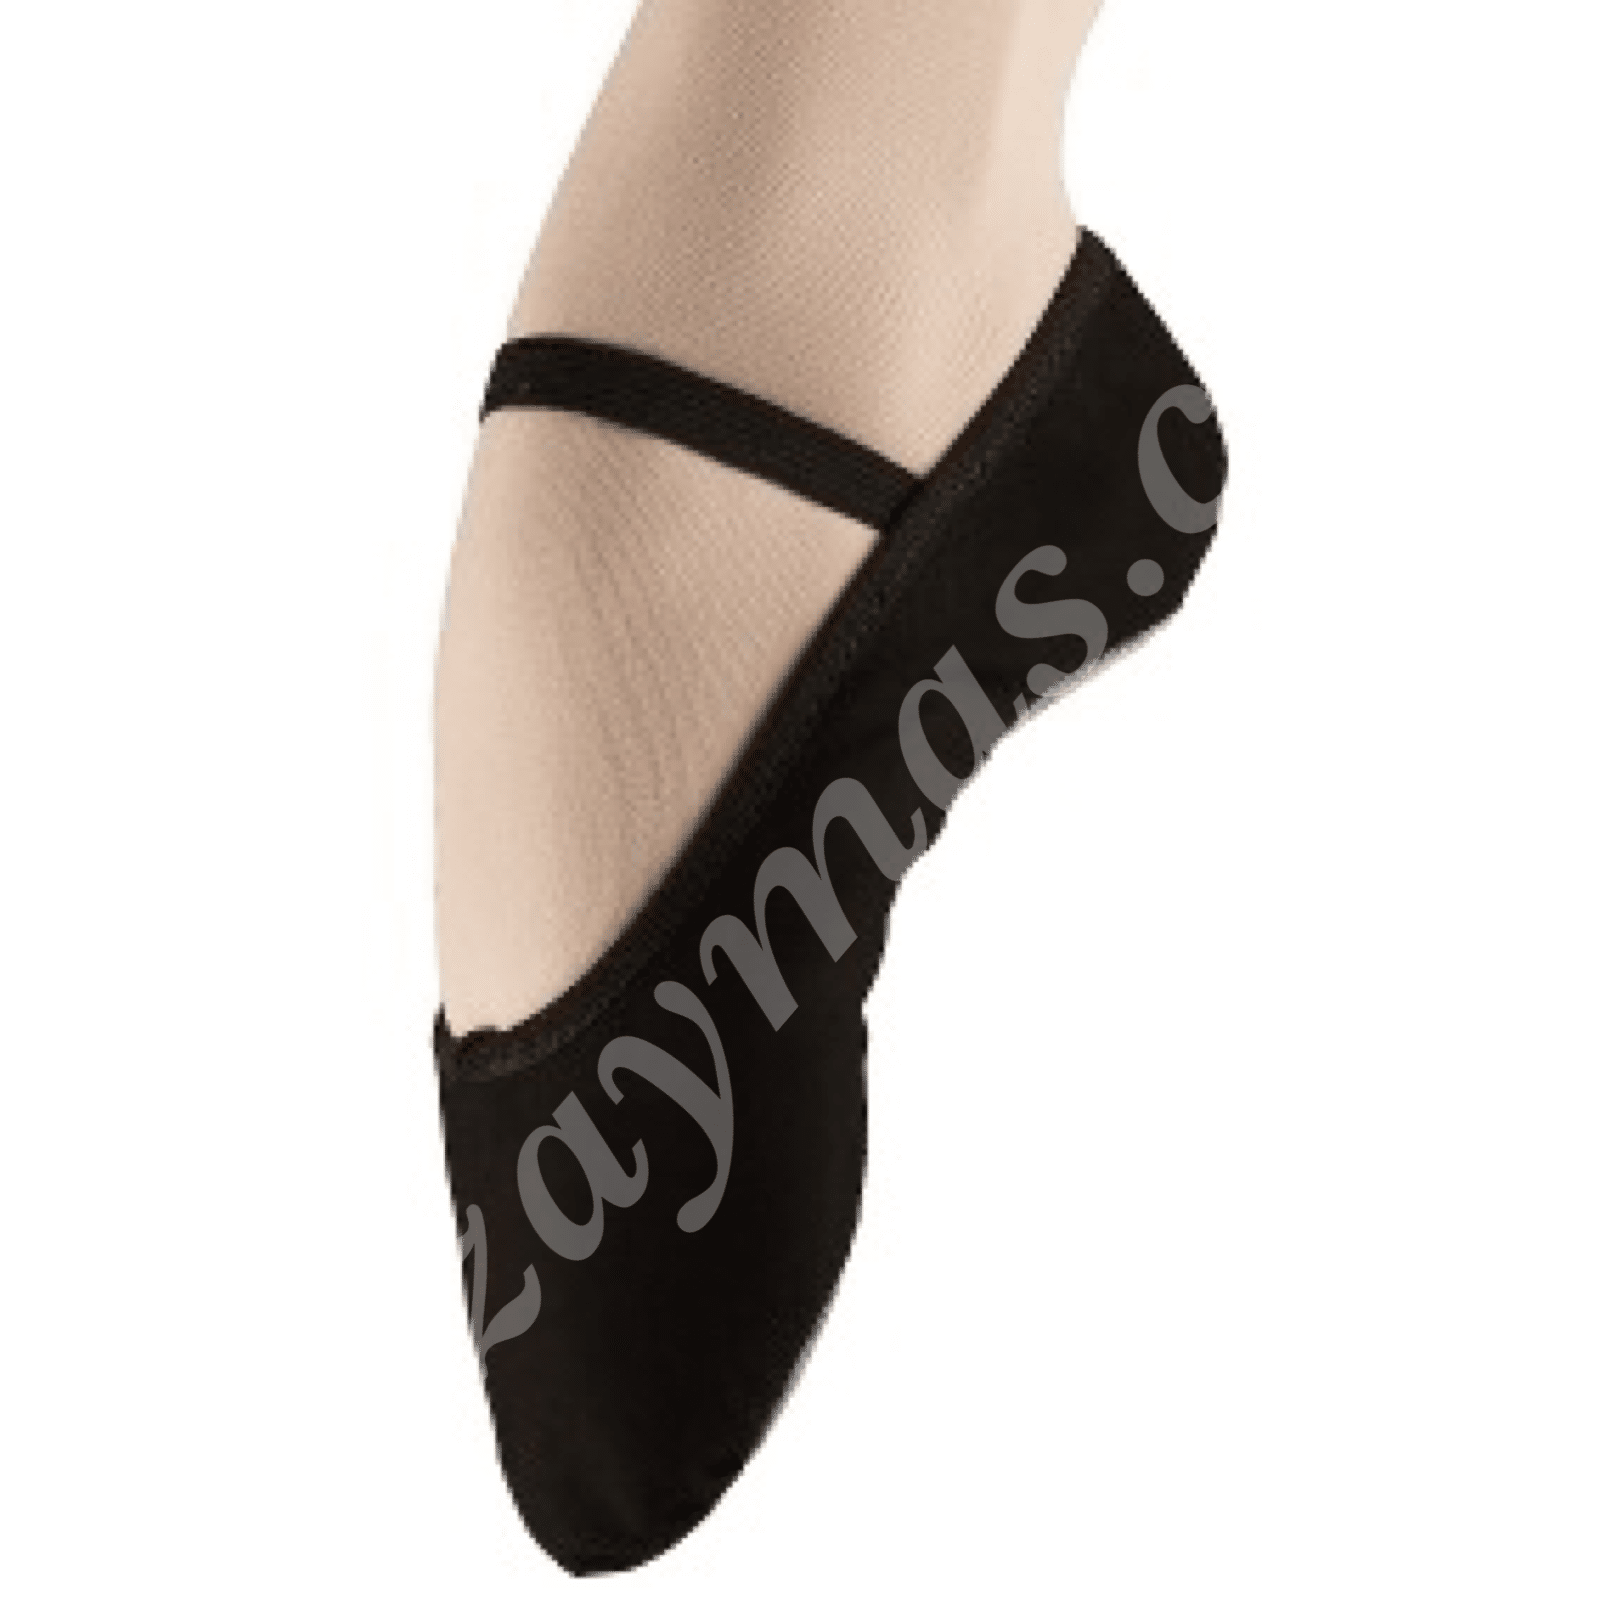 Zapatillas de ballet negras en piel o tela 1181